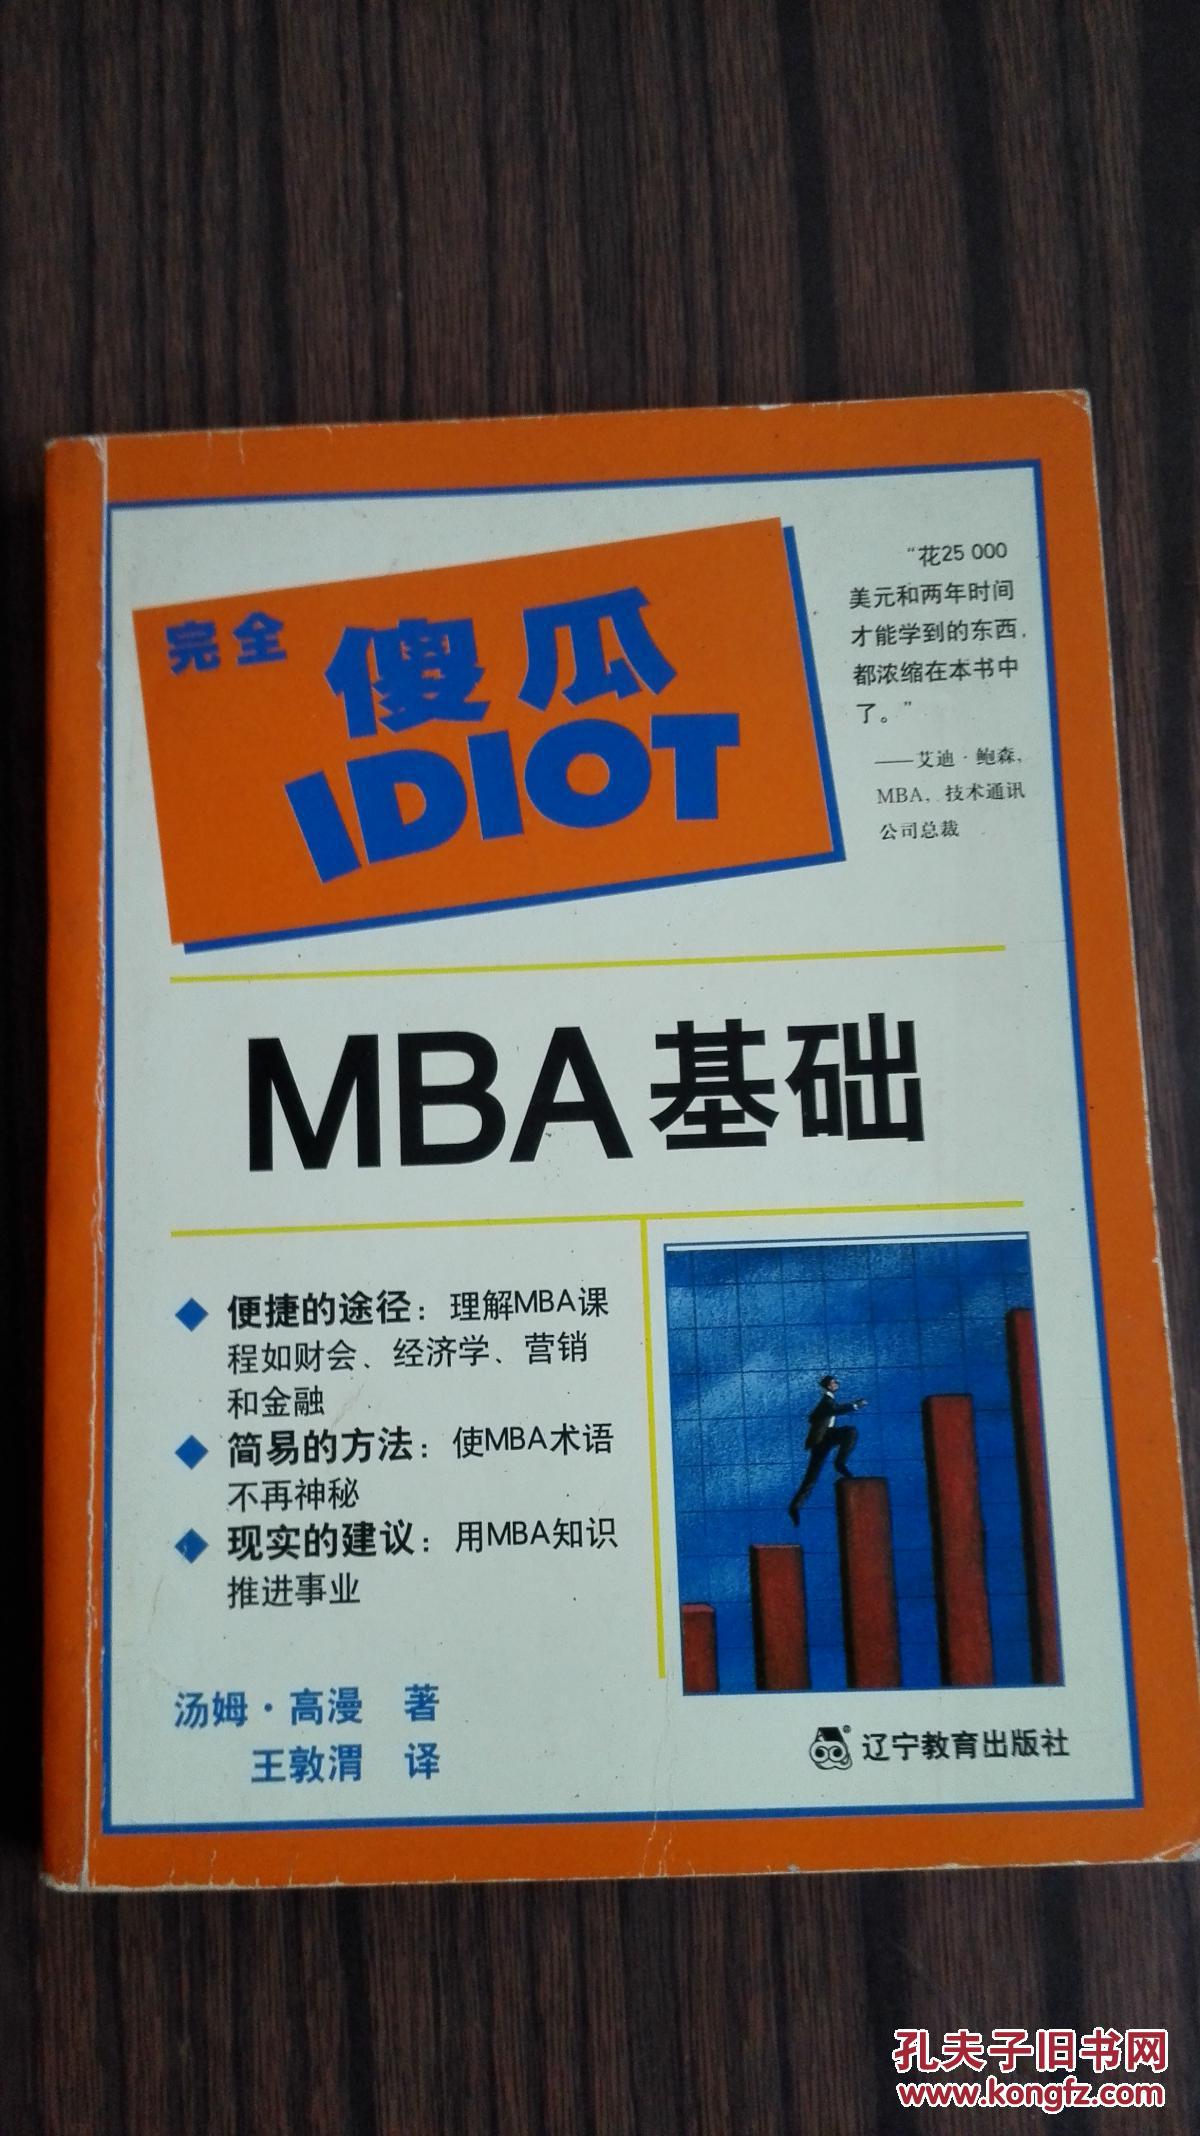 MBA基础（完全傻瓜指导系列）